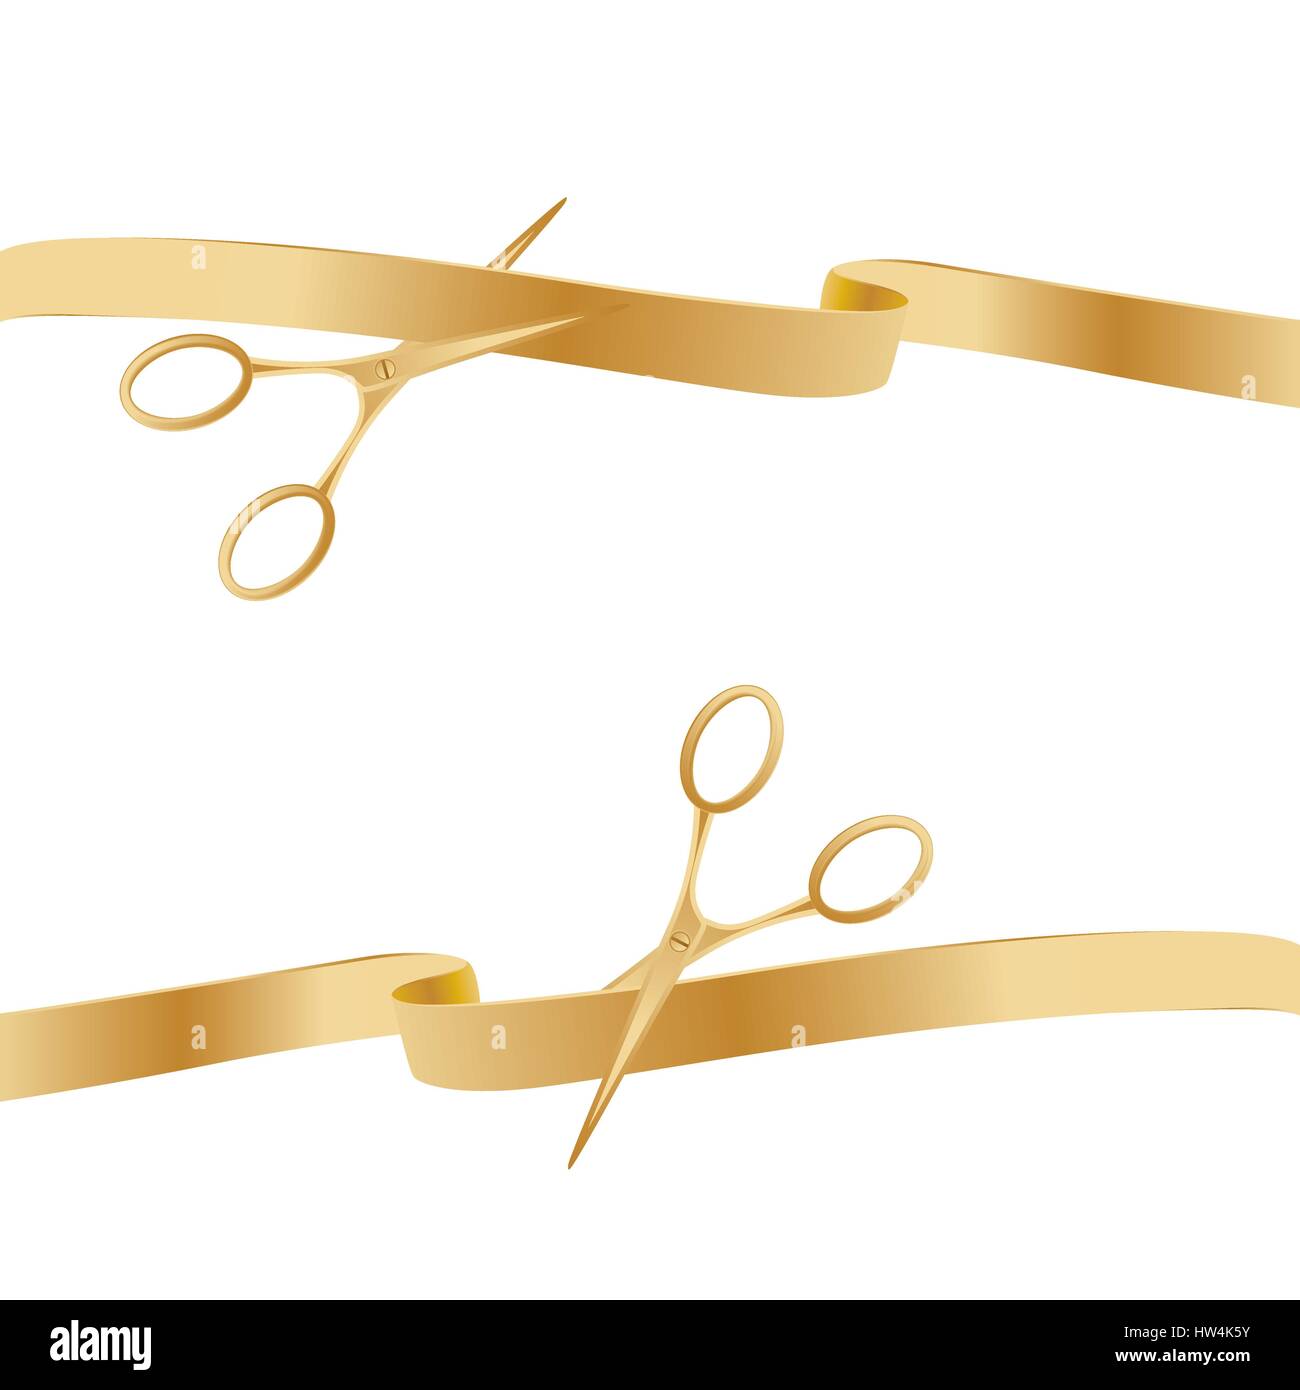 Golden Scissors Cutting Ceremony Ribbons. Vector Illustration. Stock Vector